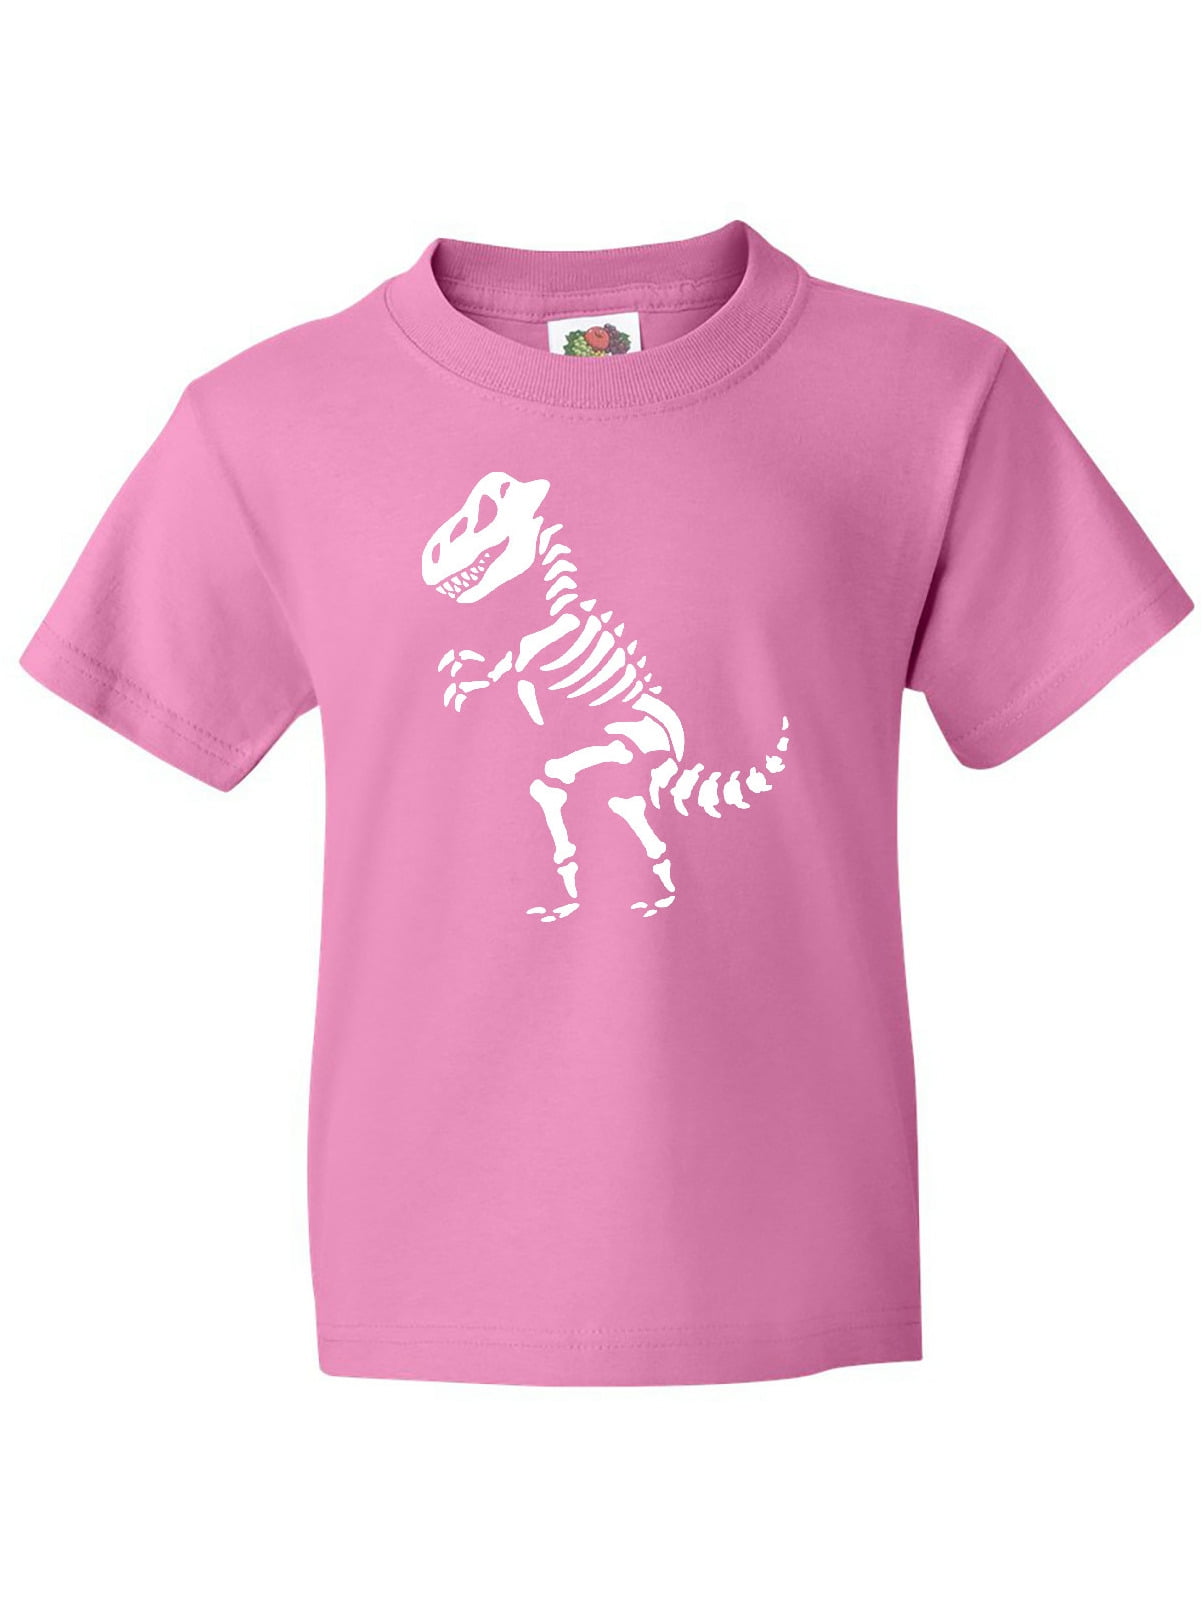 T Rex Skeleton Dinosaur Youth Boys and Girls Fashion Short Sleeve T-Shirt